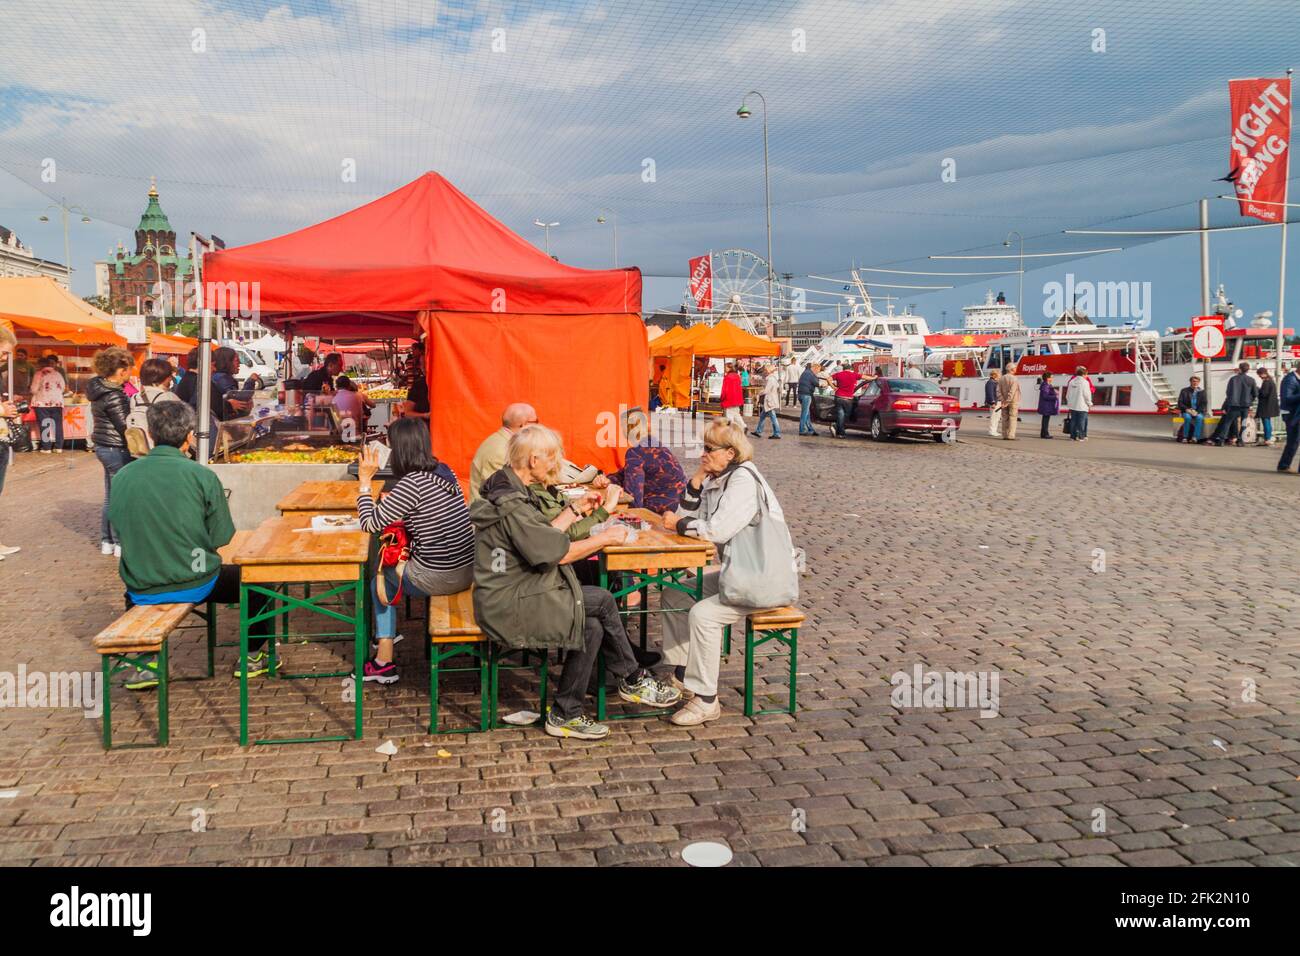 HELSINKI, FINLAND - AUGUST 25, 2016: View of food stalls at Kauppatori Market Square in Helsinki Stock Photo